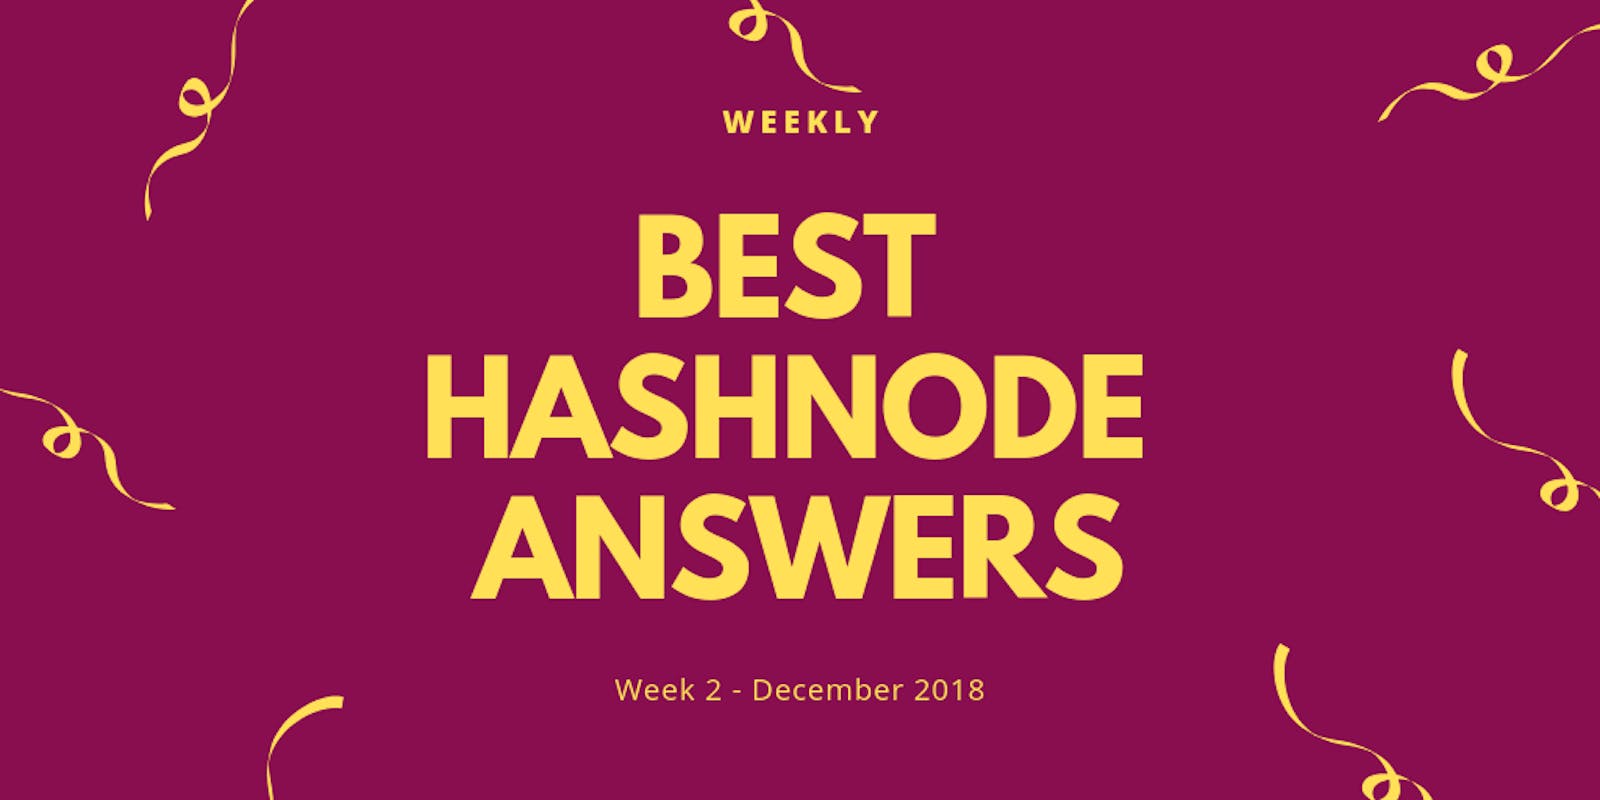 Best Hashnode Answers: December 2018 (Week 2)